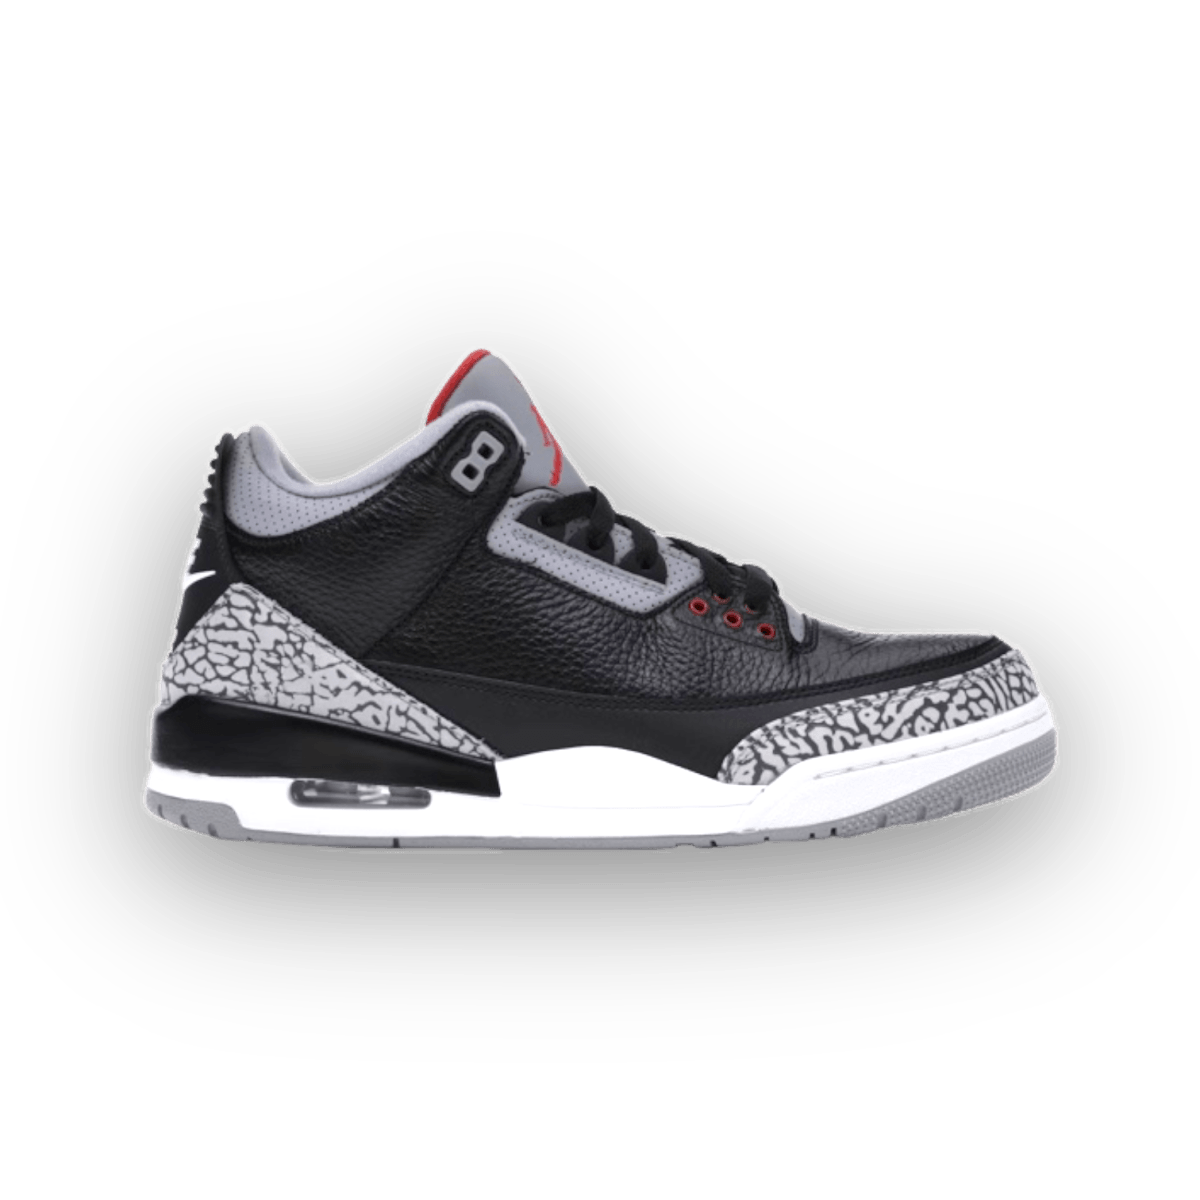 Air Jordan 3 Retro OG 'Black Cement' 2018 - Mid Sneaker - Jawns on Fire Sneakers & Streetwear